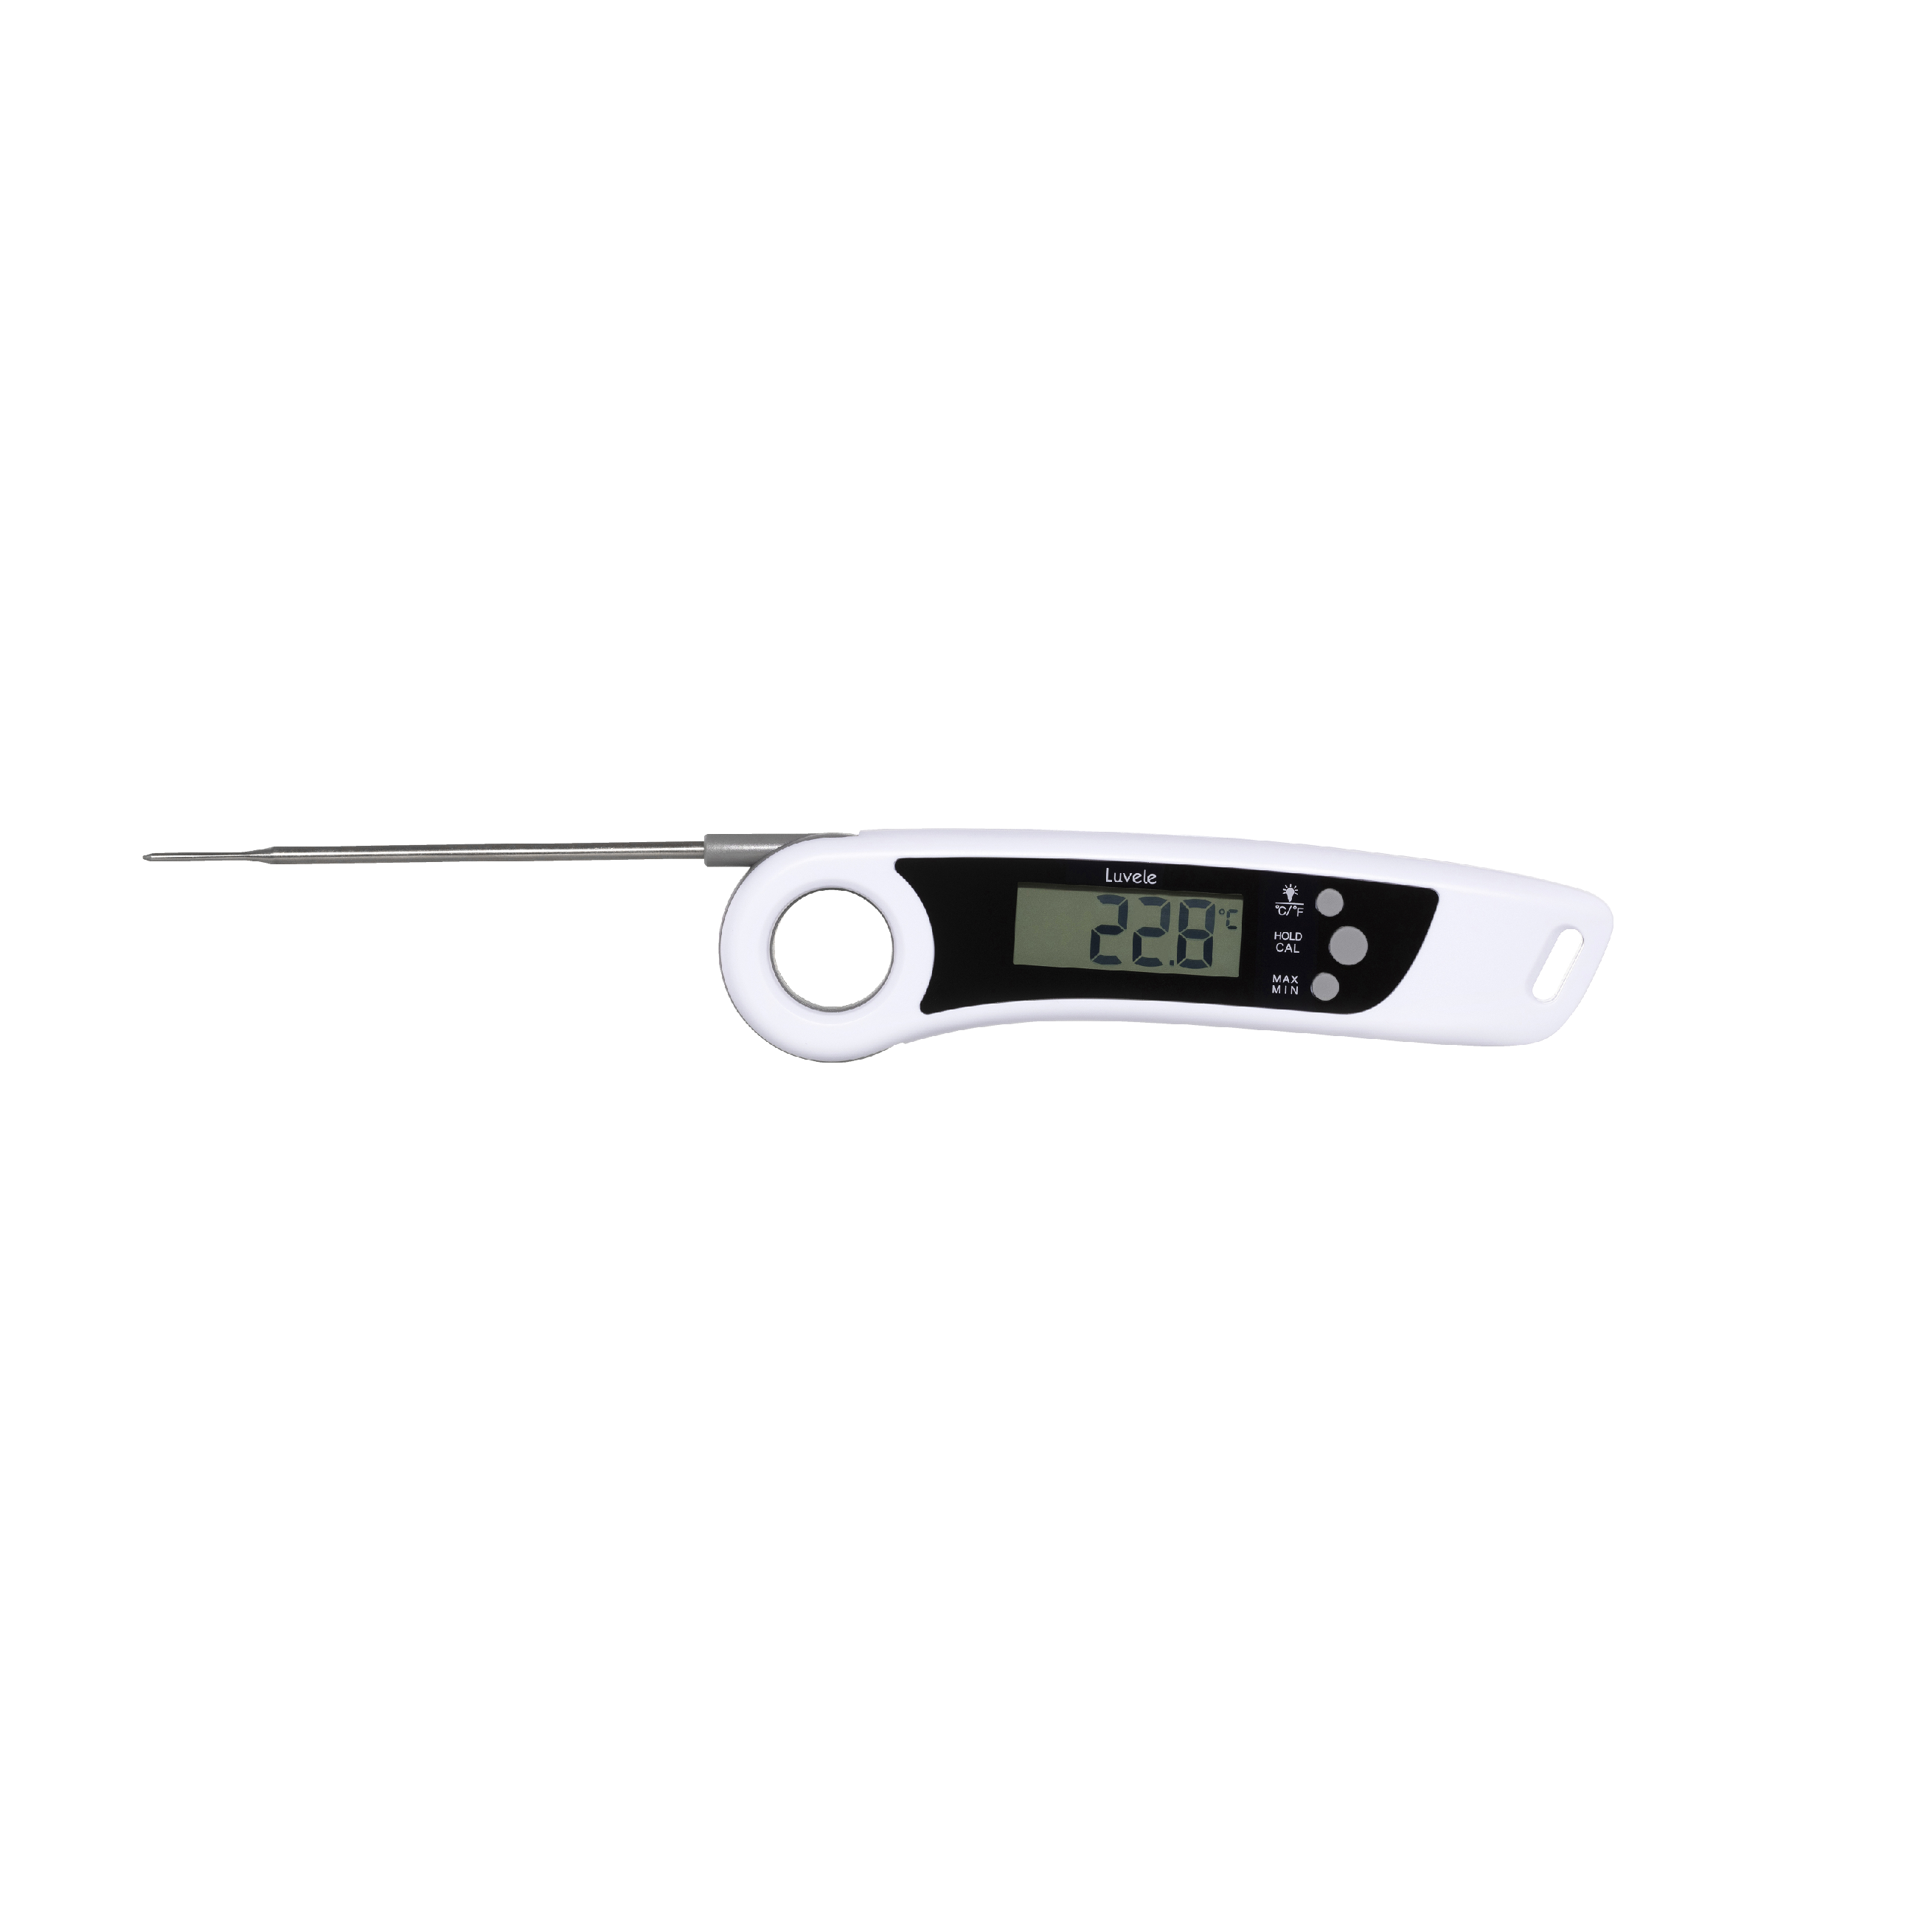 Luvele thermometer - Luvele US